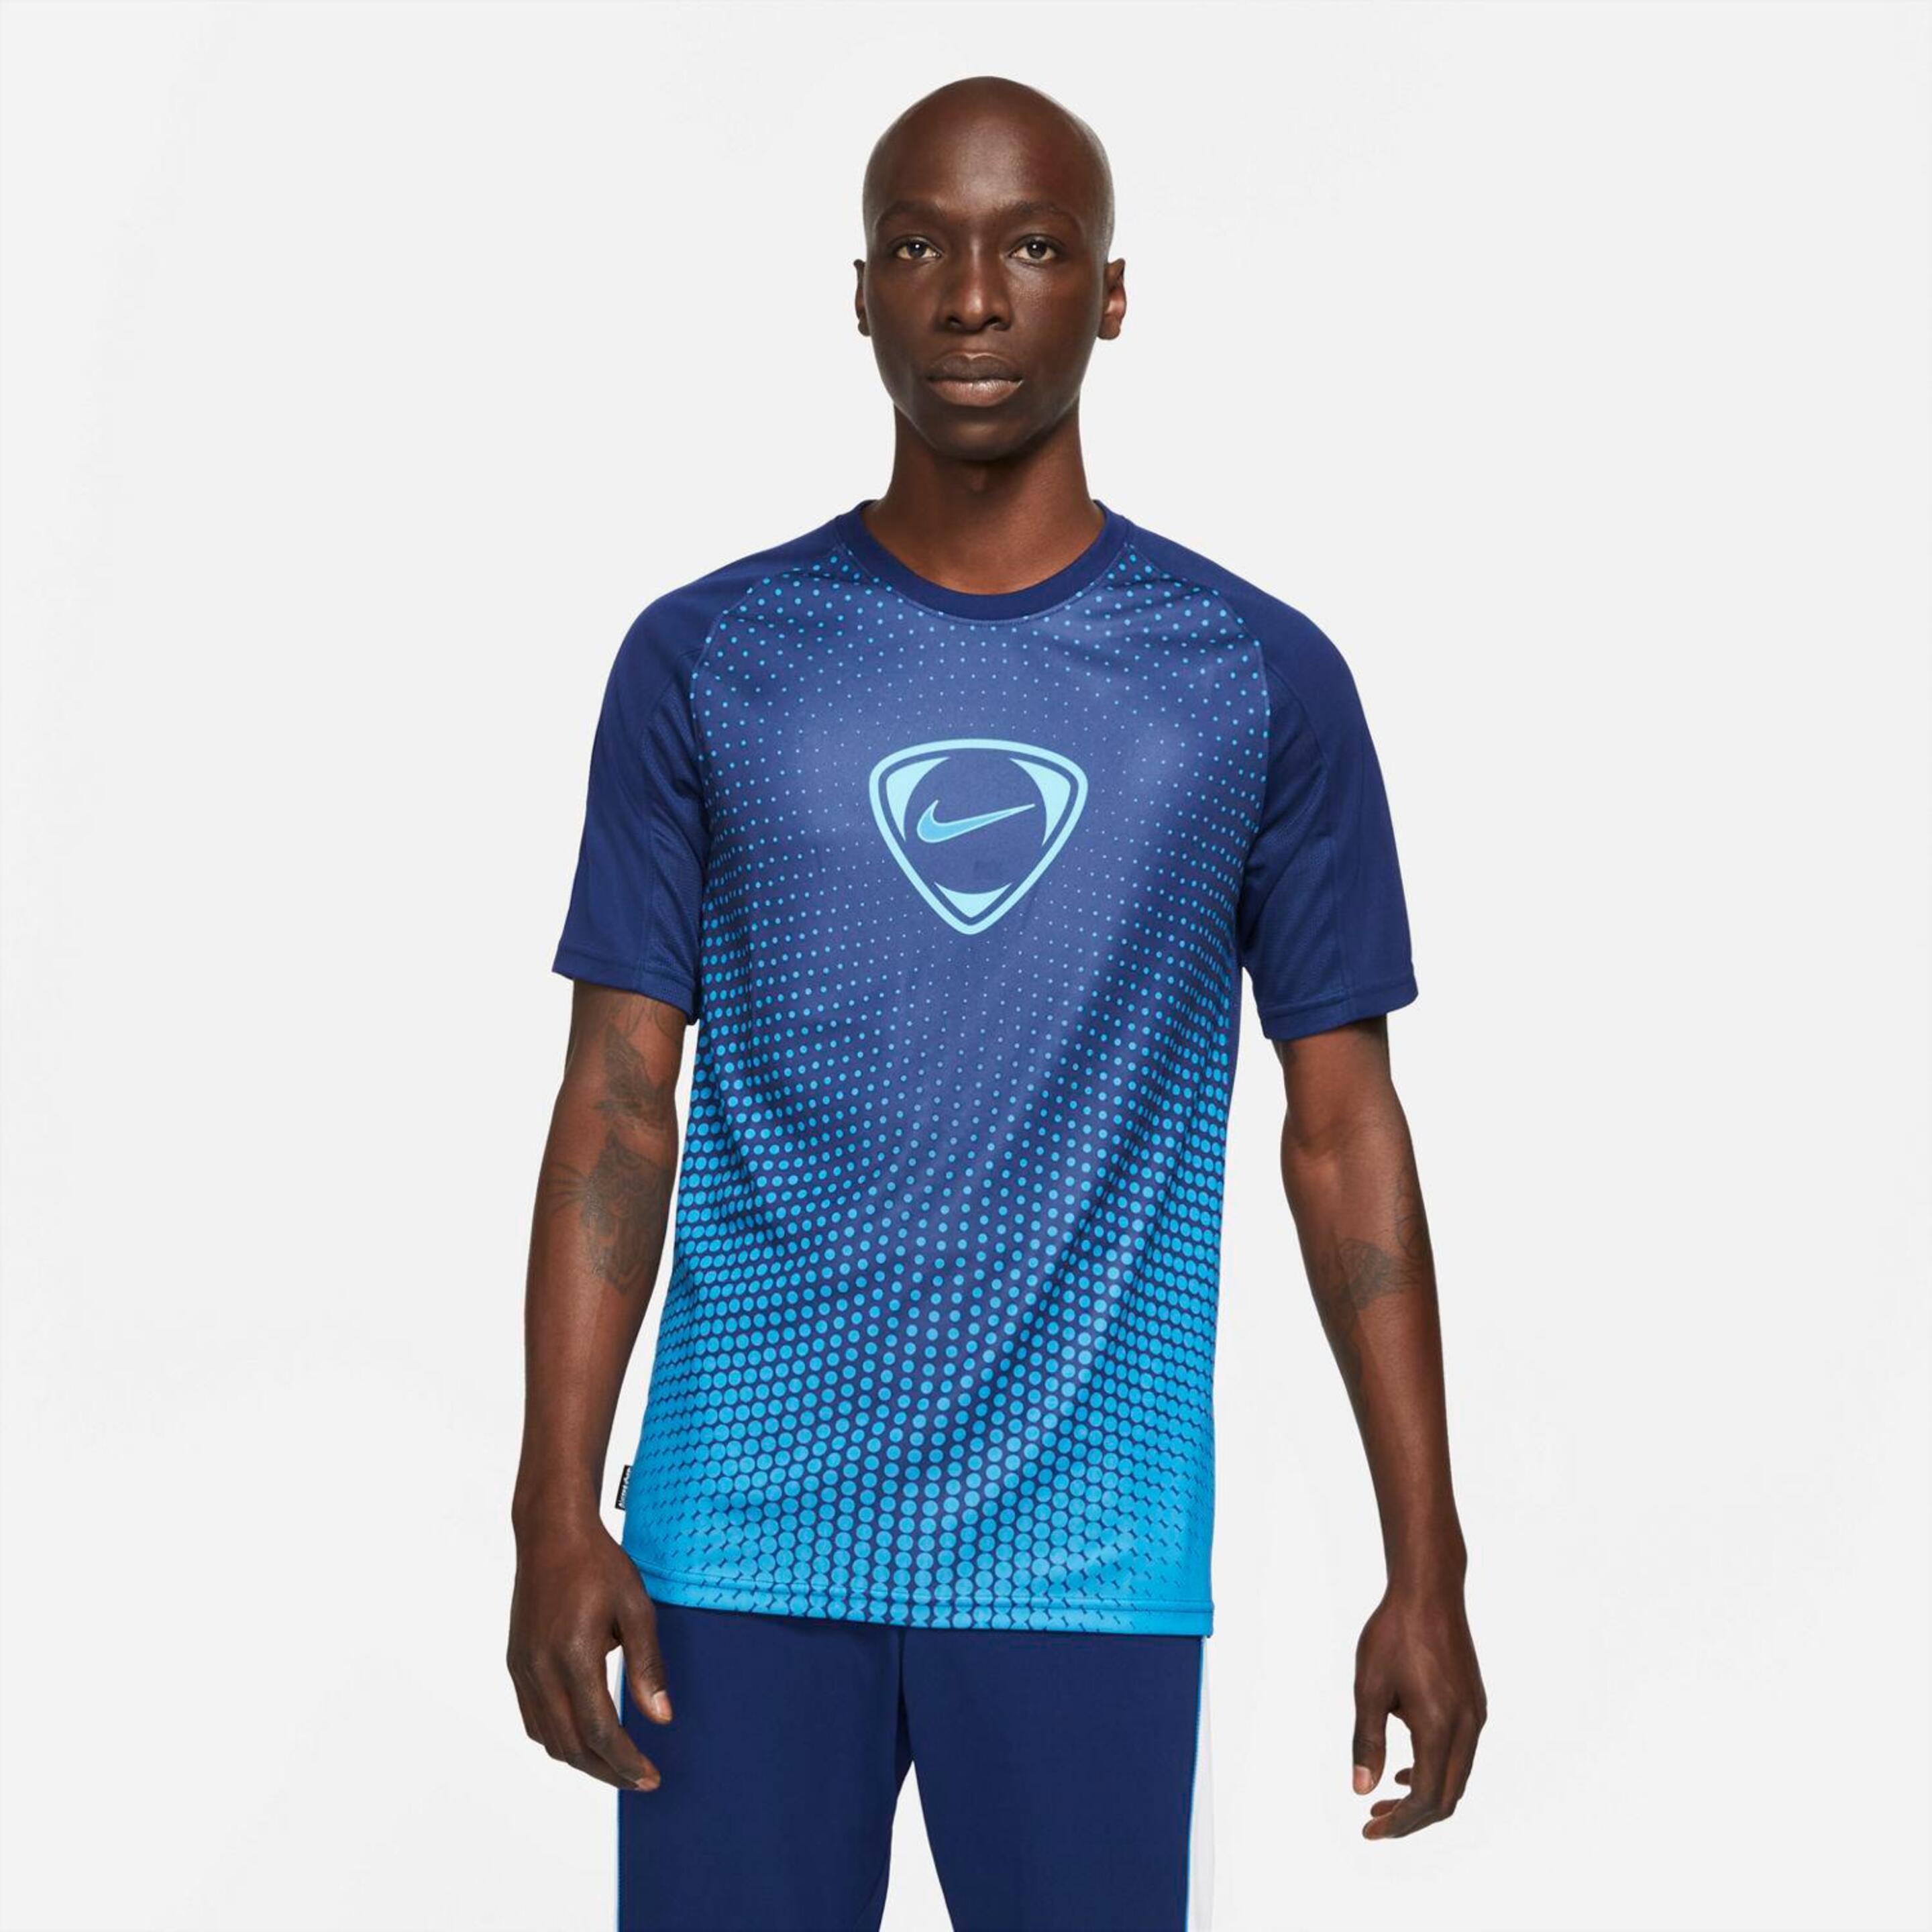 T-shirt Nike Df Acd Top